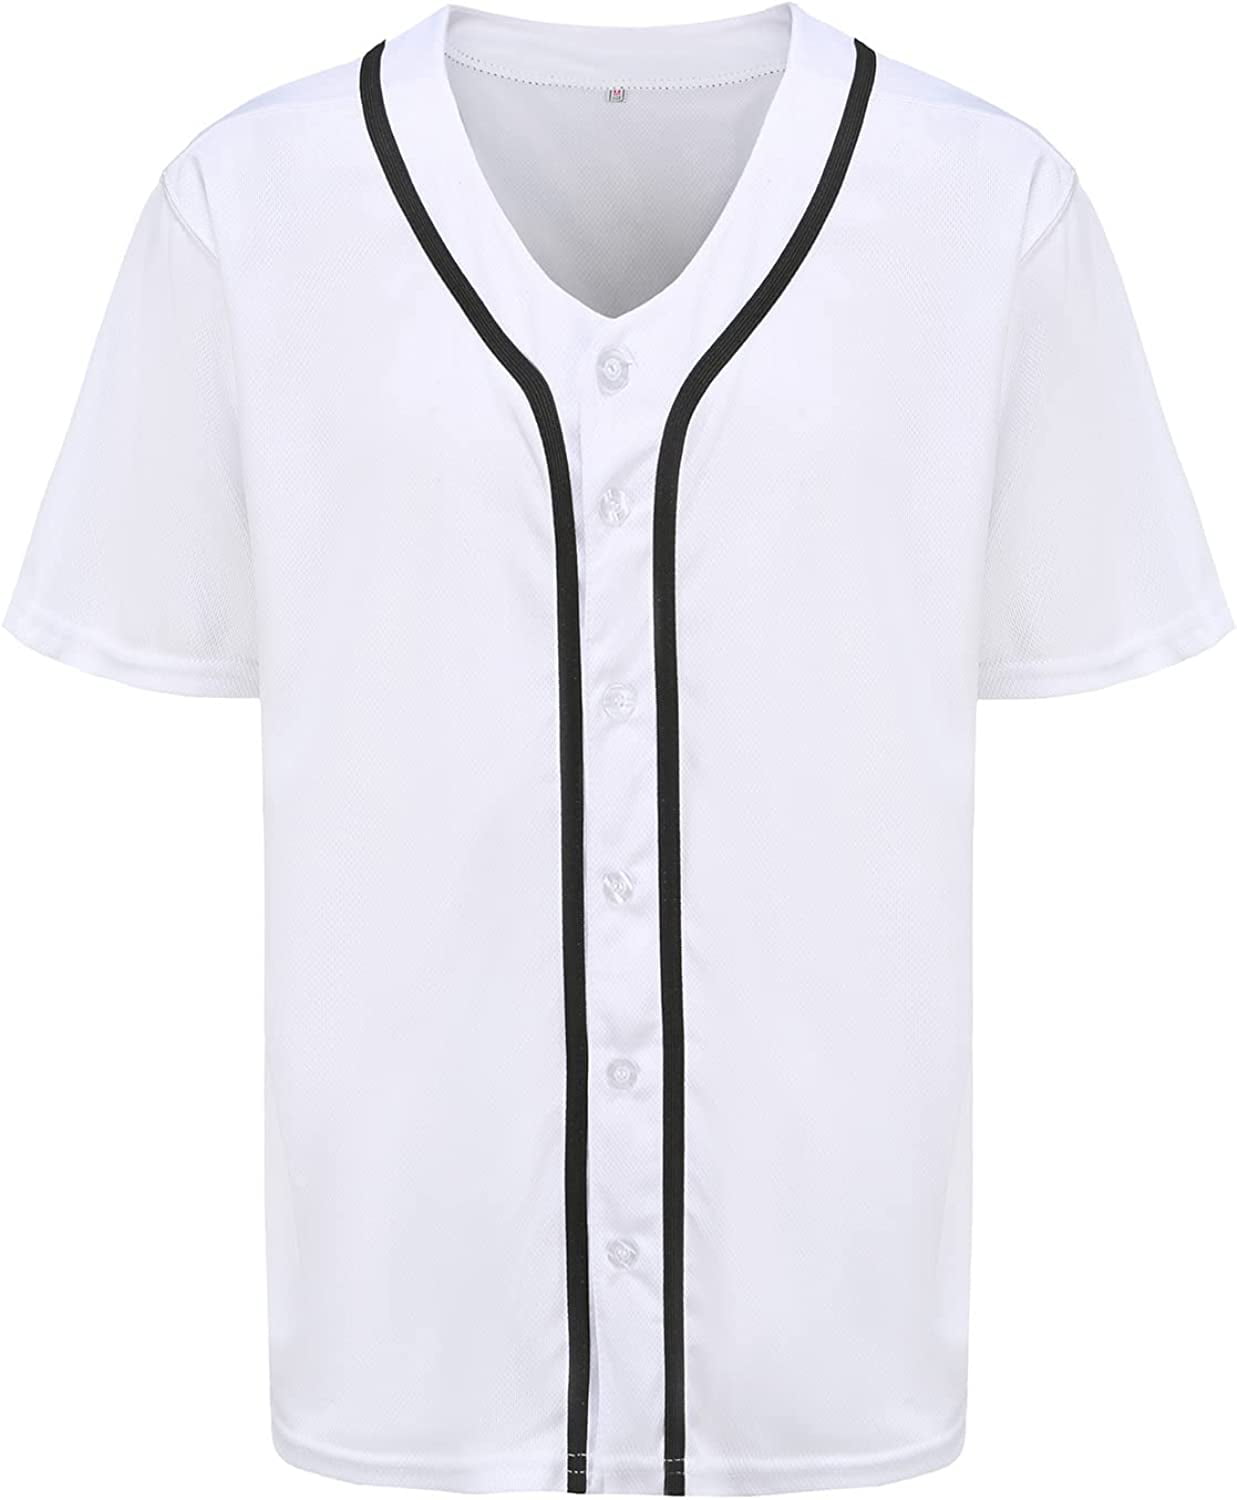 Buy Youth Medium Custom (Name/Number on Back) Atlanta Braves 2-Button Replica  Baseball Jersey Online at desertcartUAE